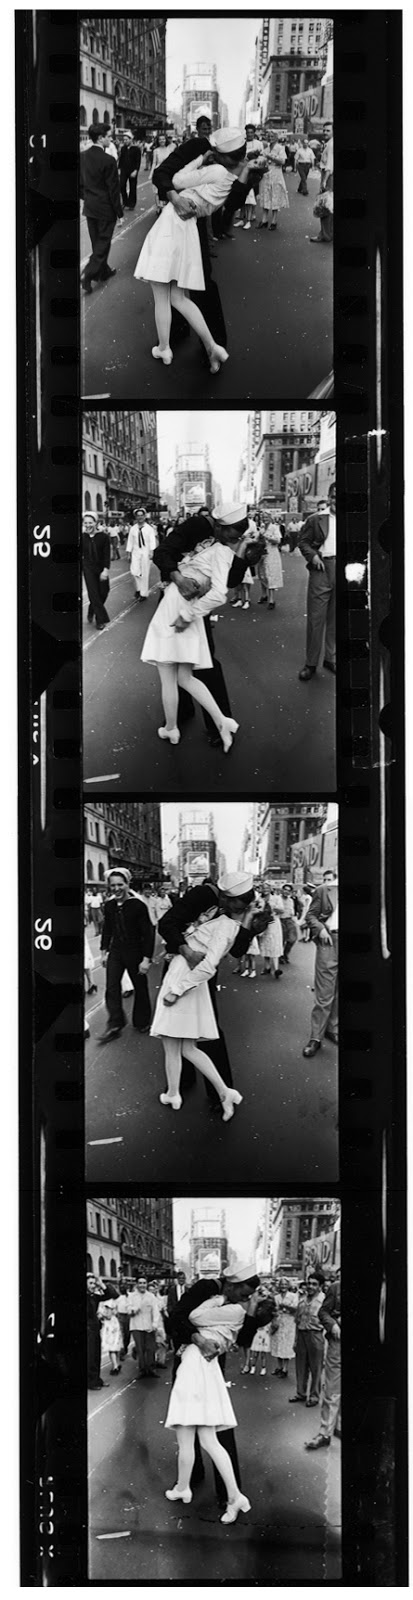 Three frames of "VJ-Day, Times Square, 1945"